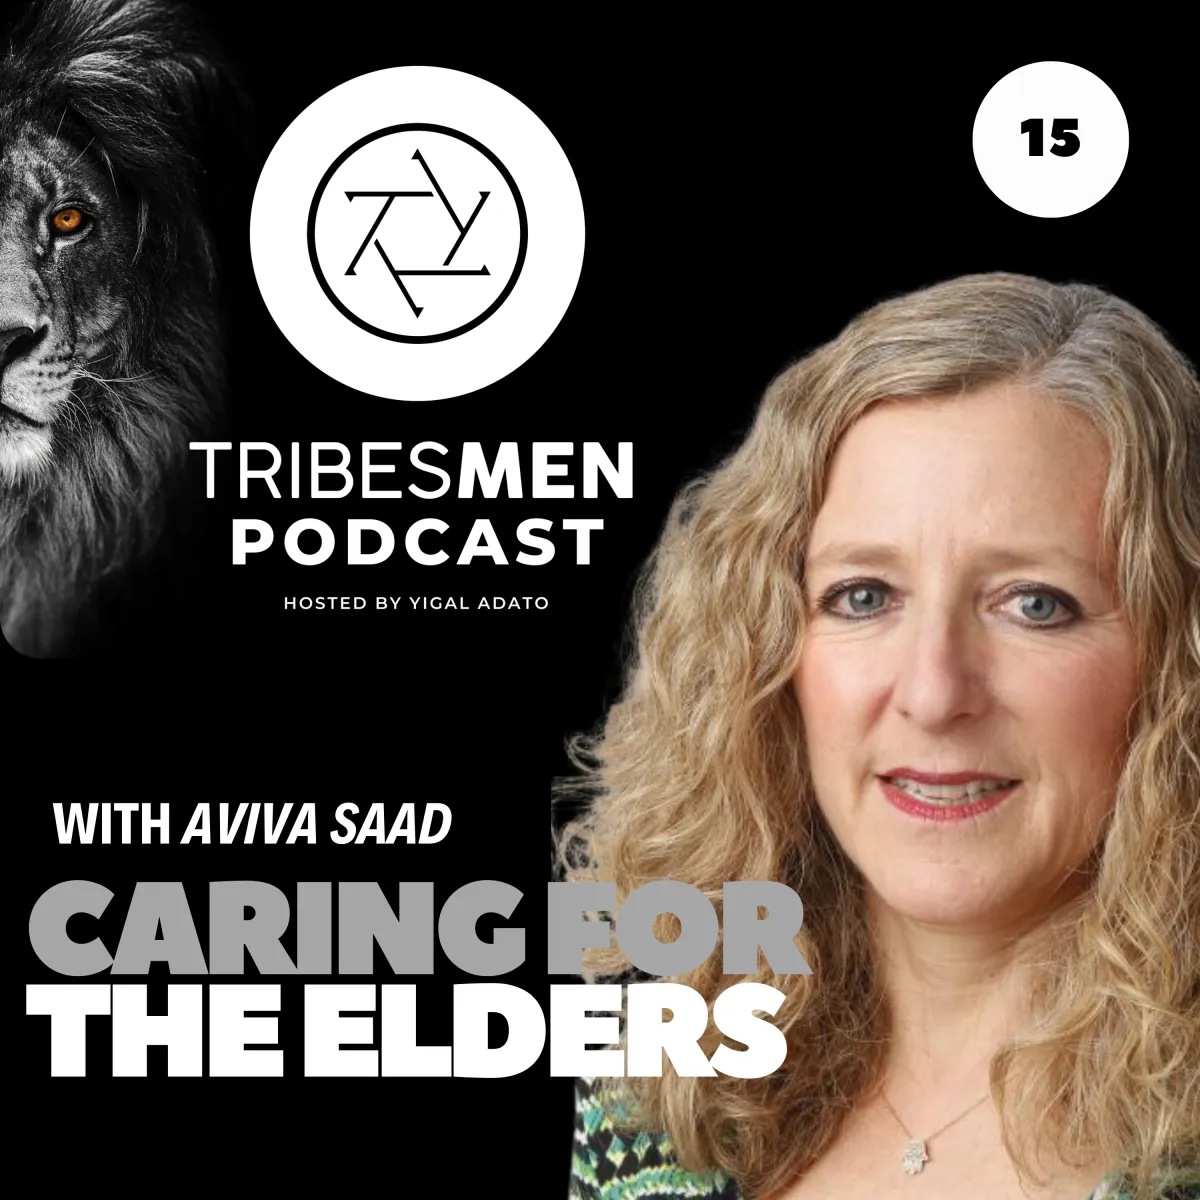 Tibesmen Podcast Episode 15 with Aviva Saad